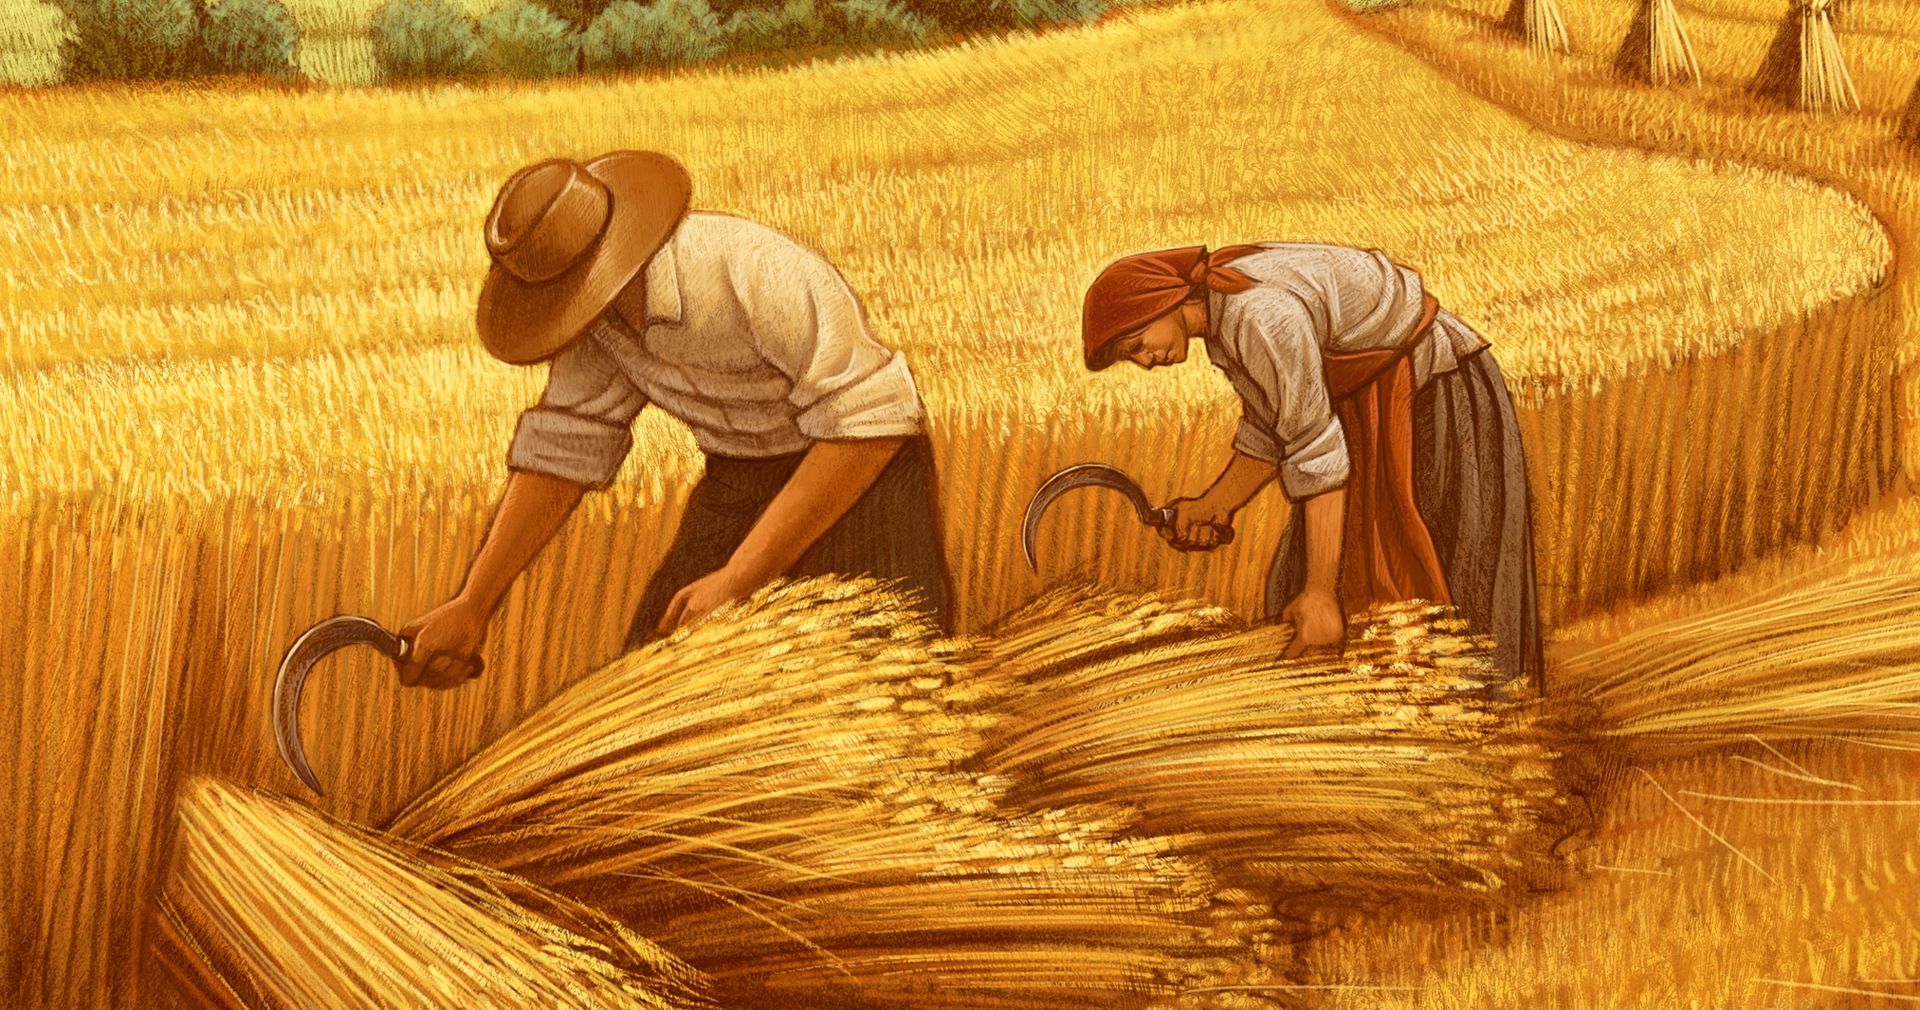 Illustration of harvesting wheat